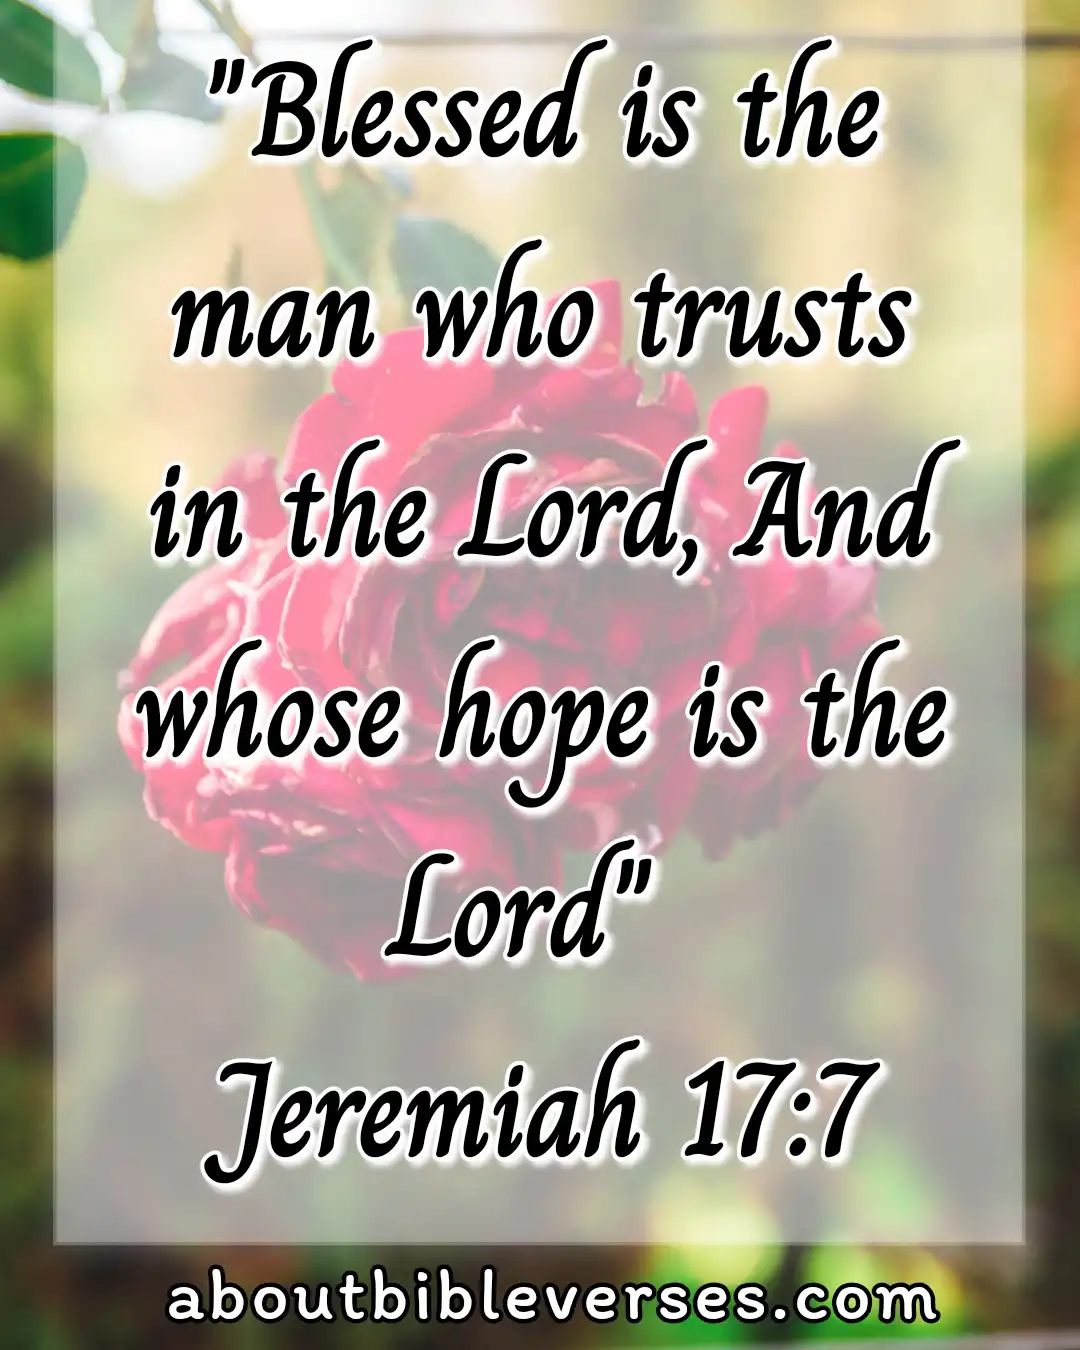 God Blessed Us (Jeremiah 17:7)